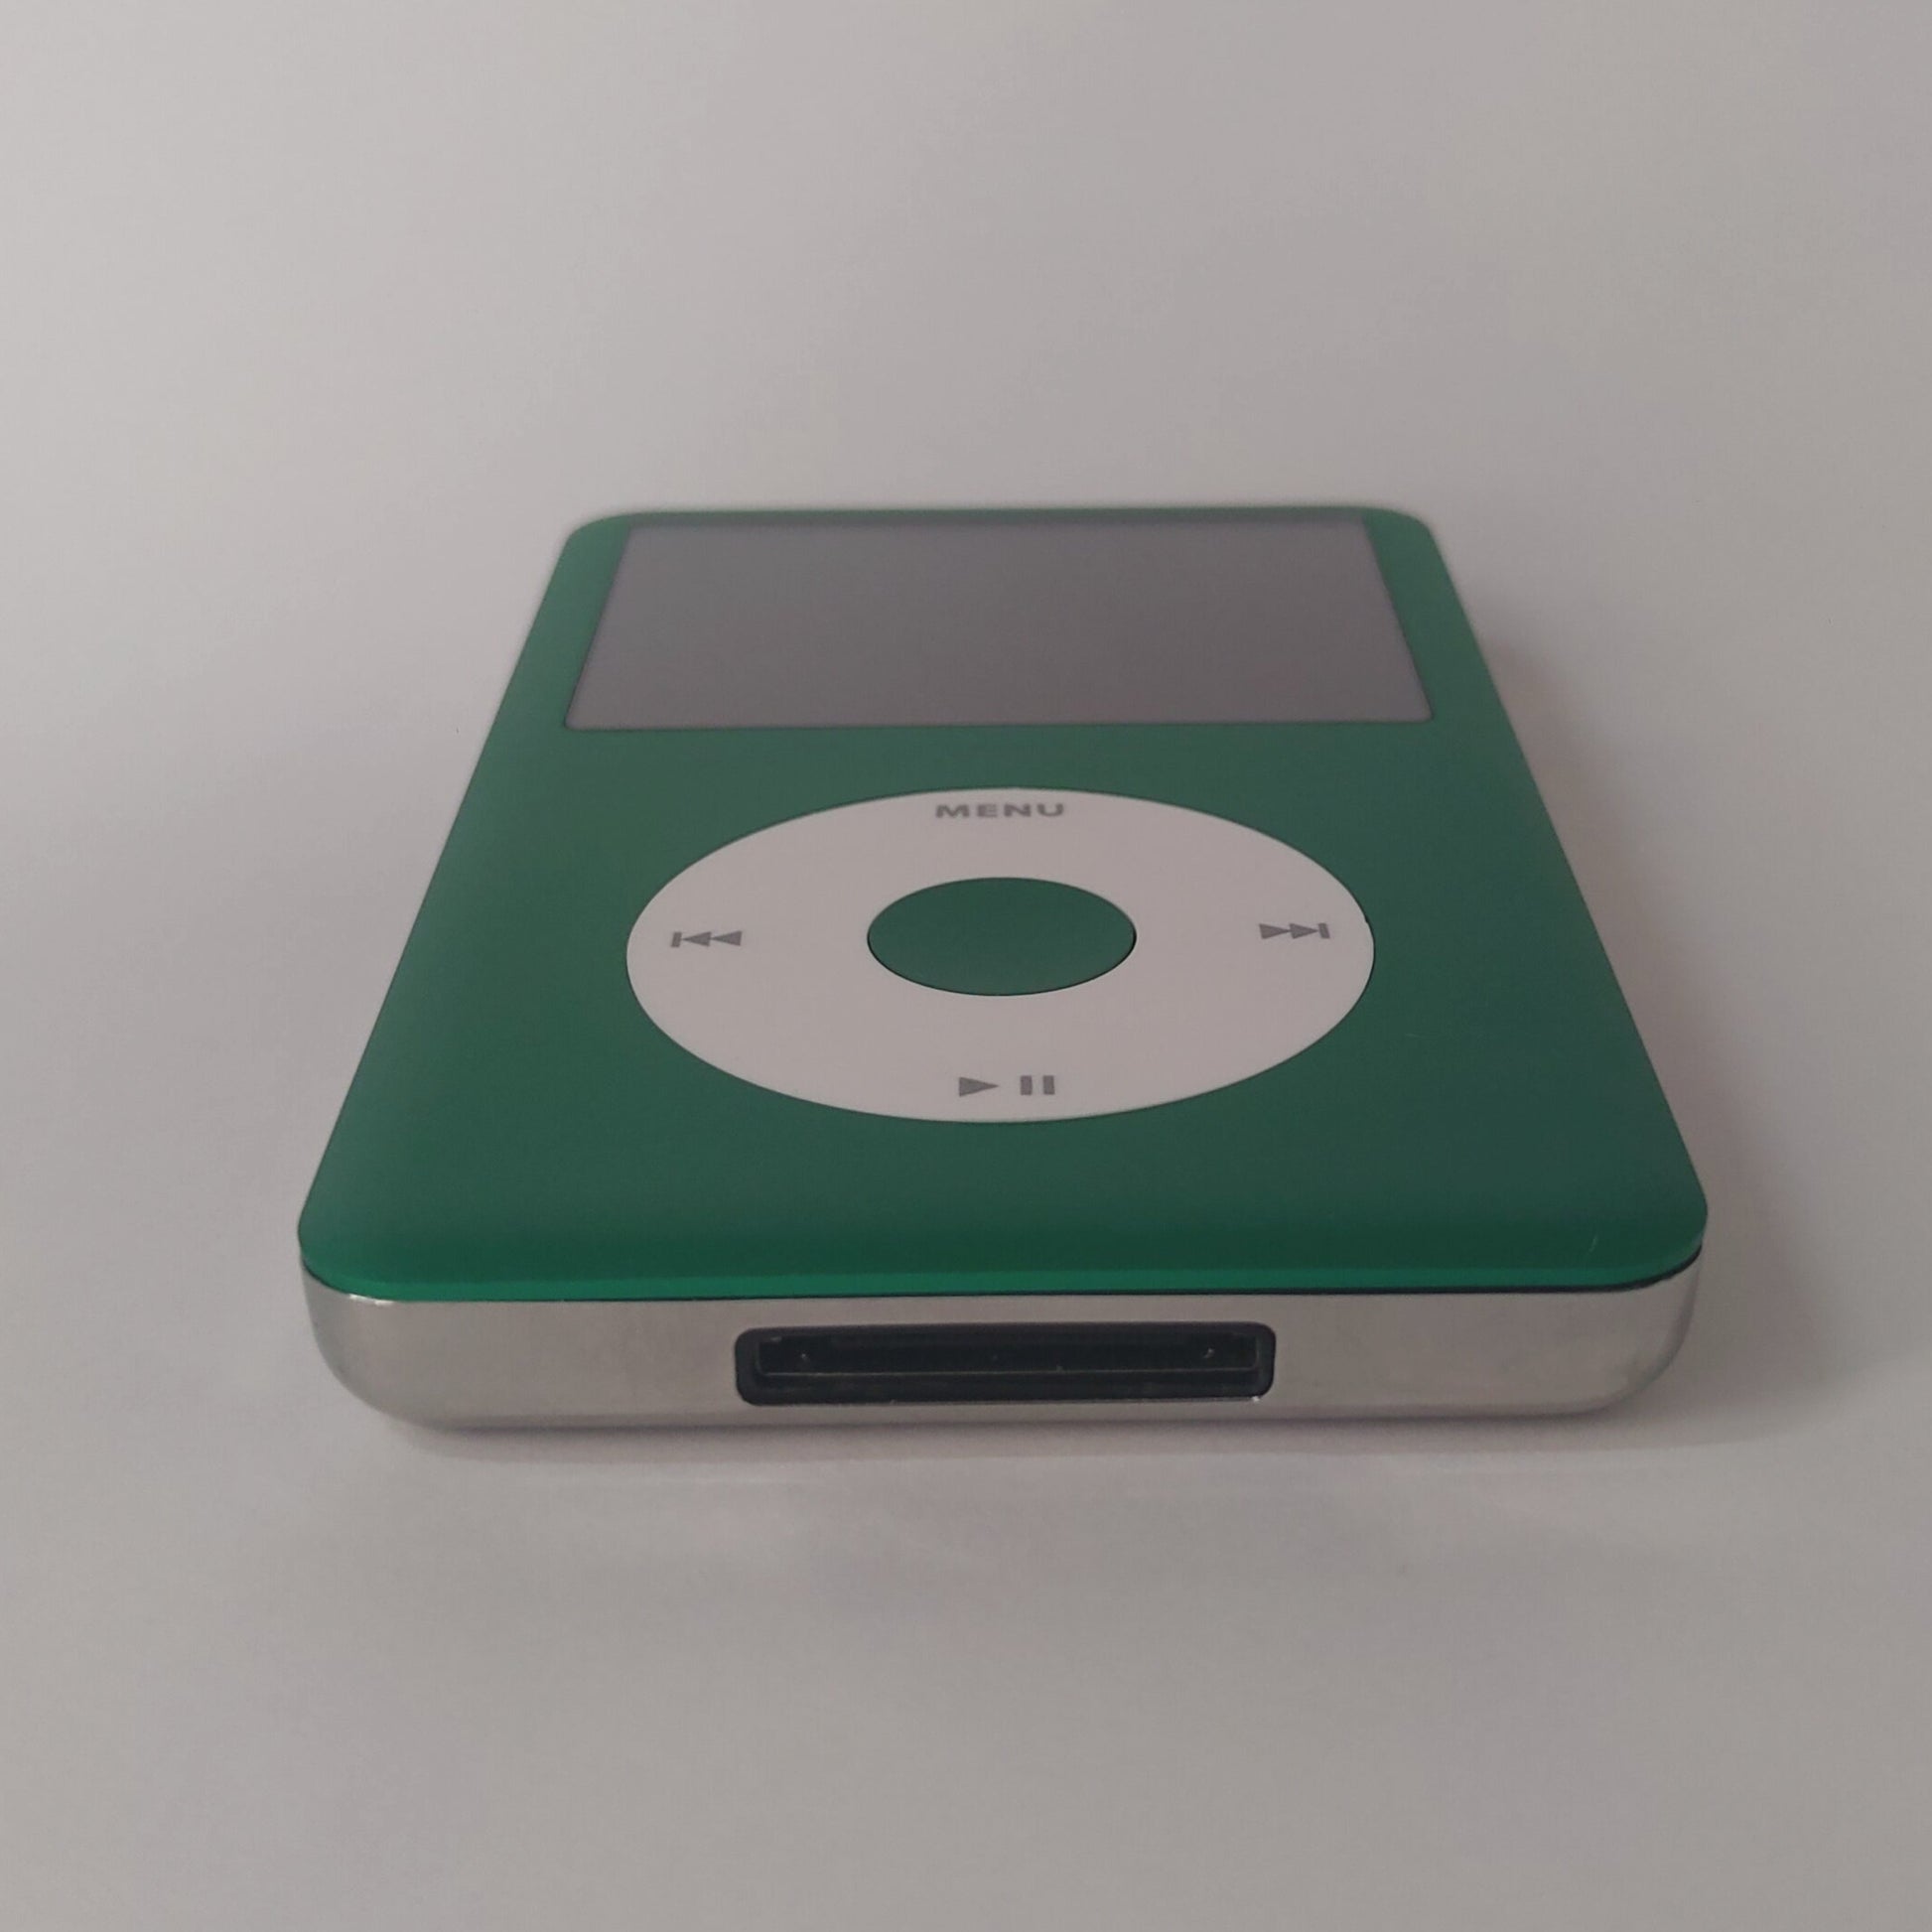 Custom iPod classic green and white botton view